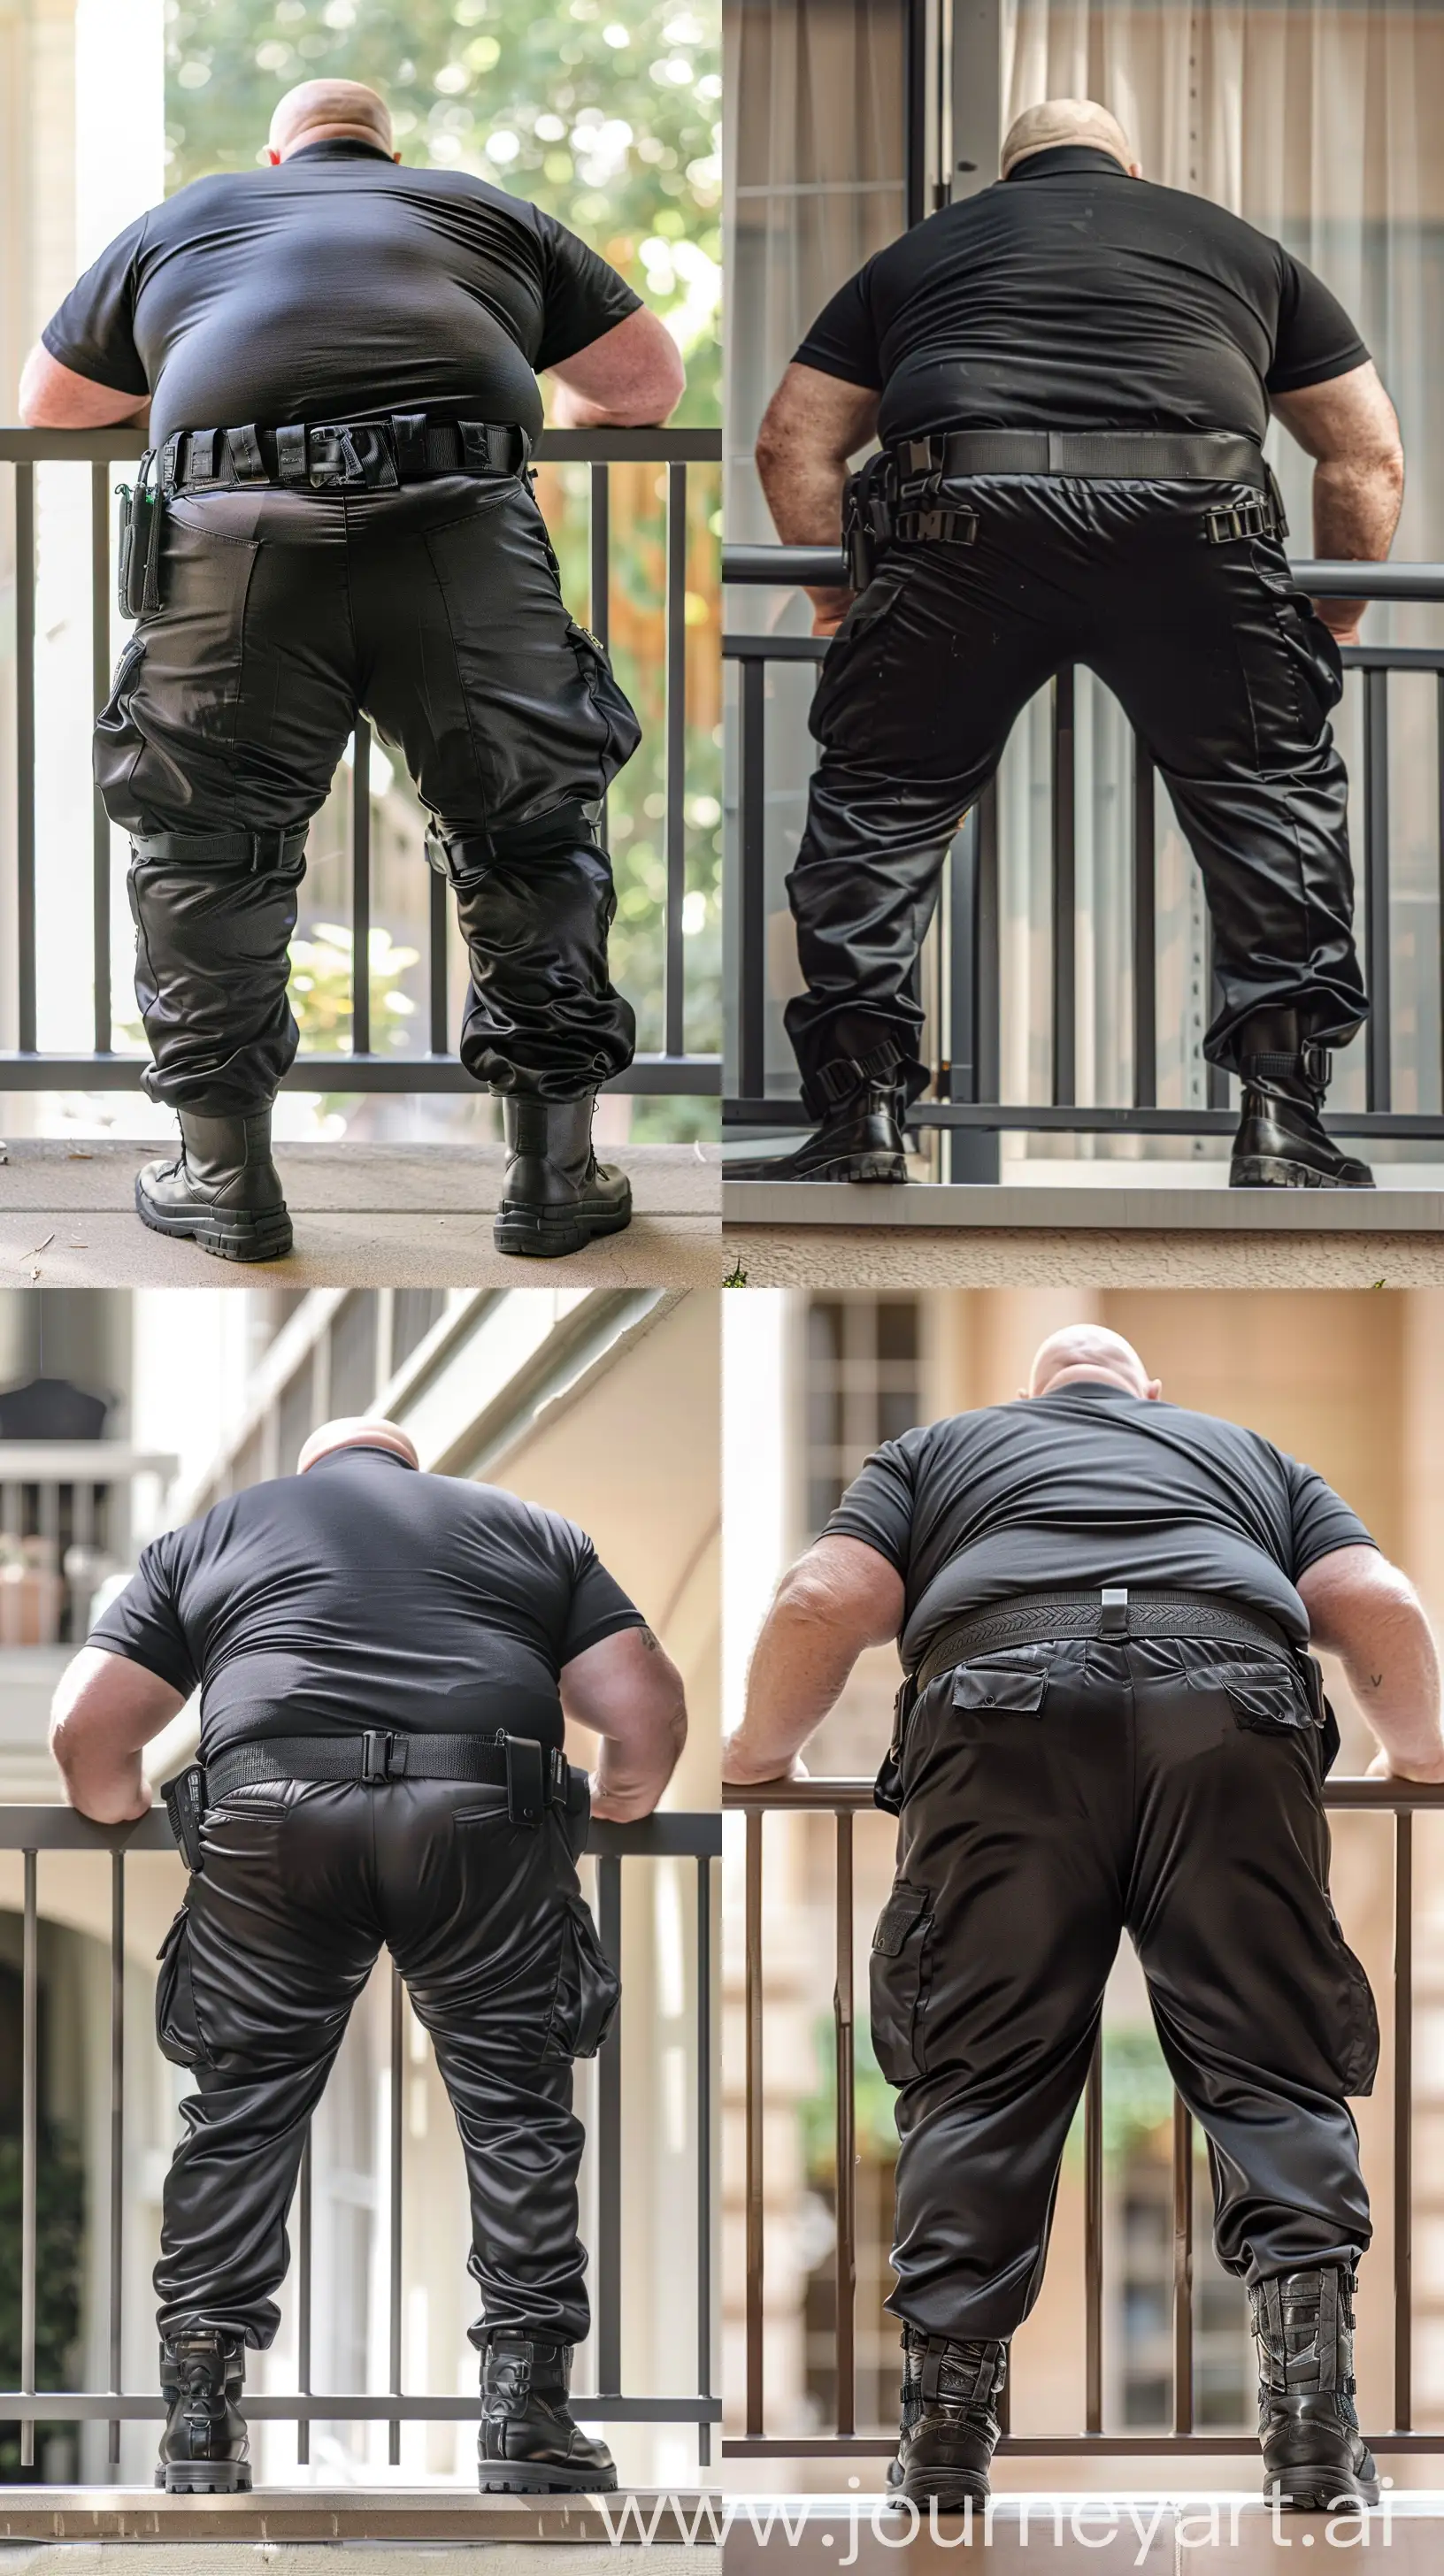 Elderly-Security-Guard-Leaning-on-Balcony-Railing-in-Silk-Attire